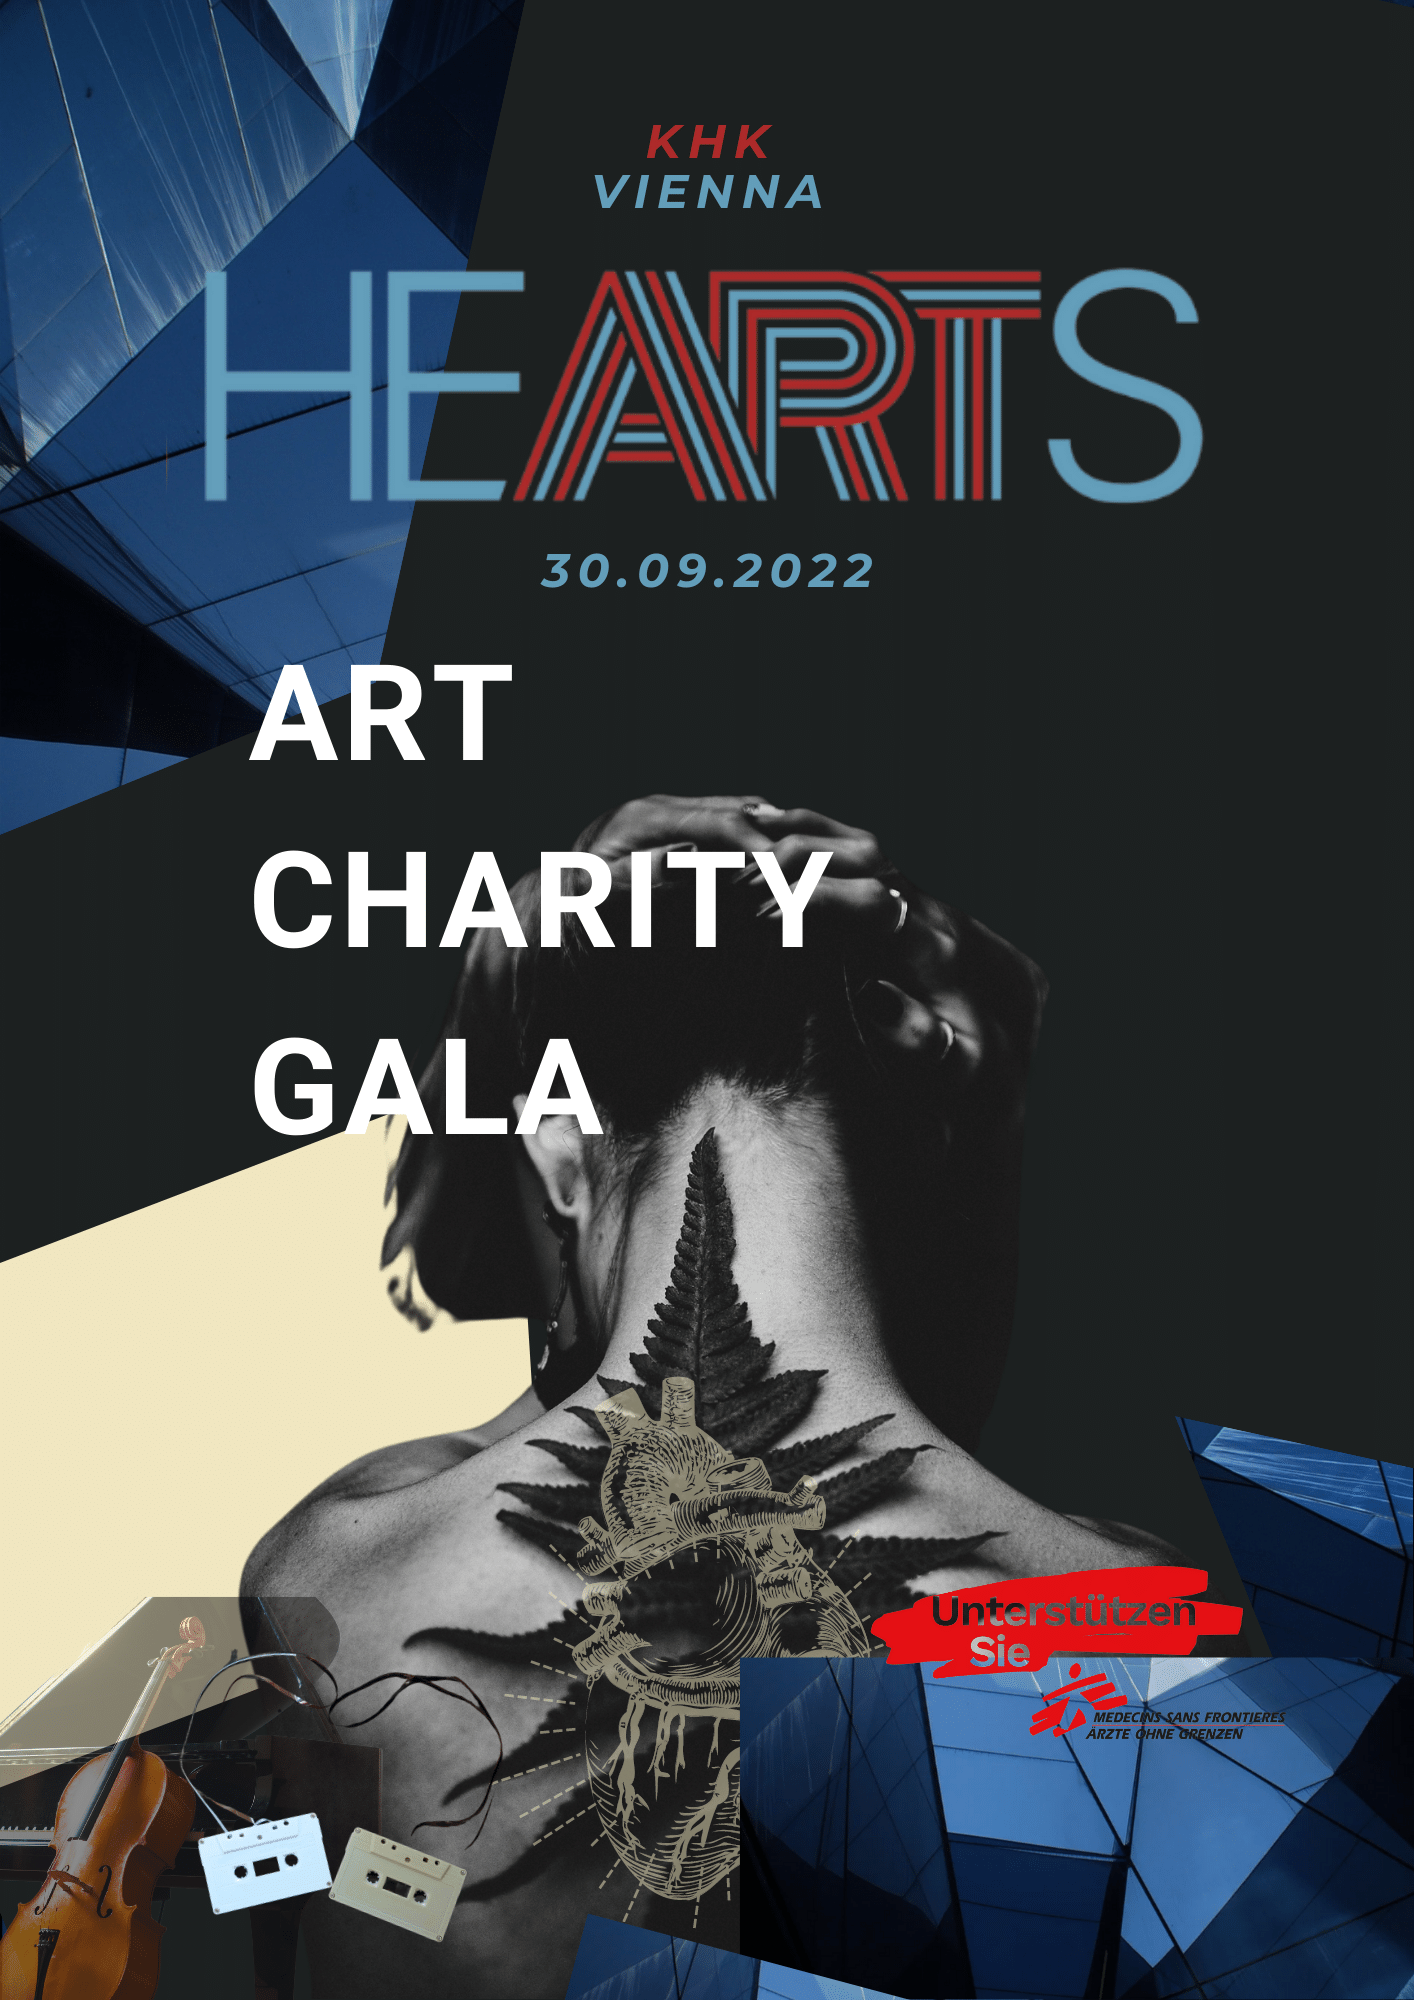 HEARTS Art Charity Gala Flyer